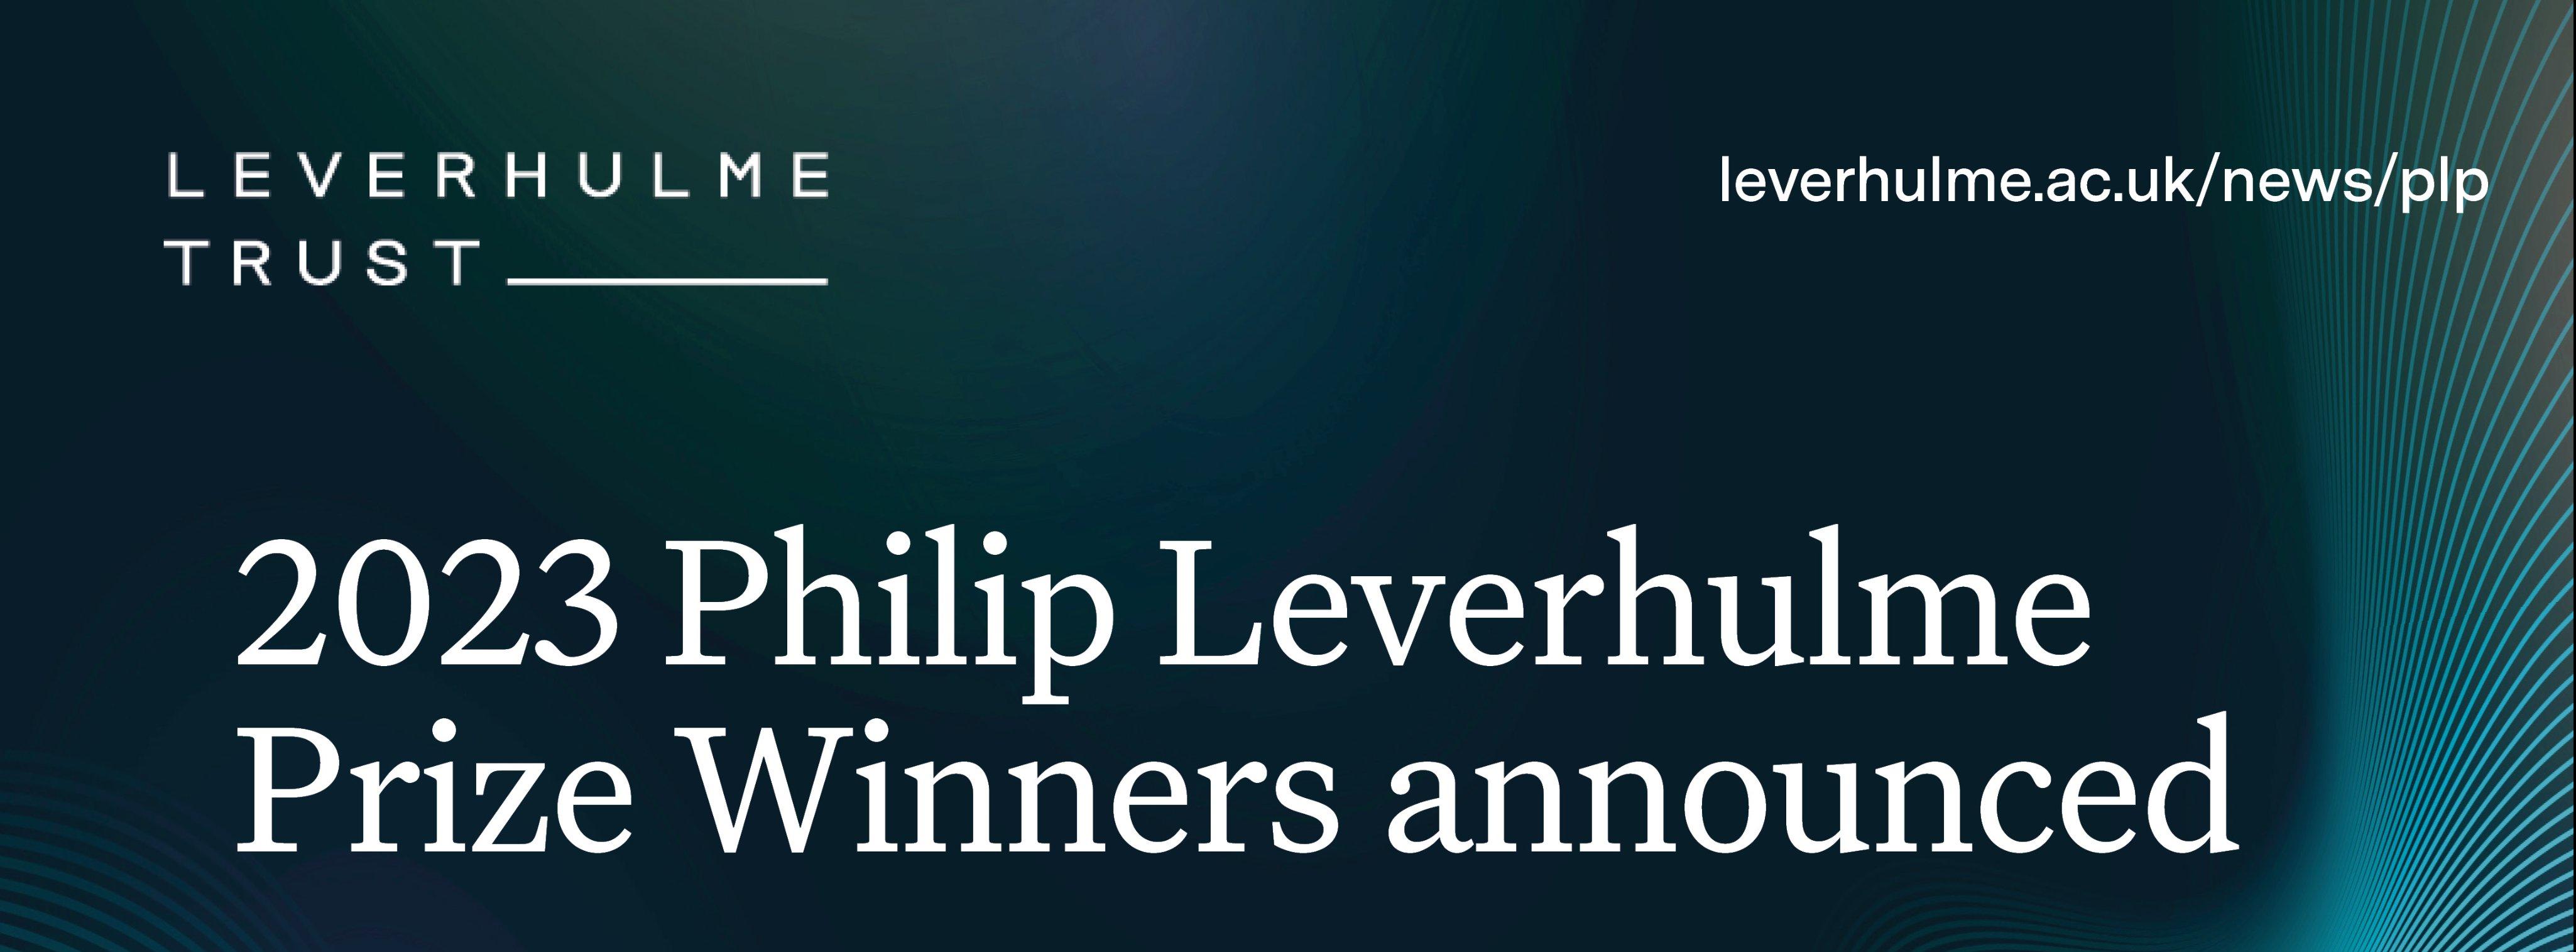 2023 Philip Leverhulme Prize Winners announced